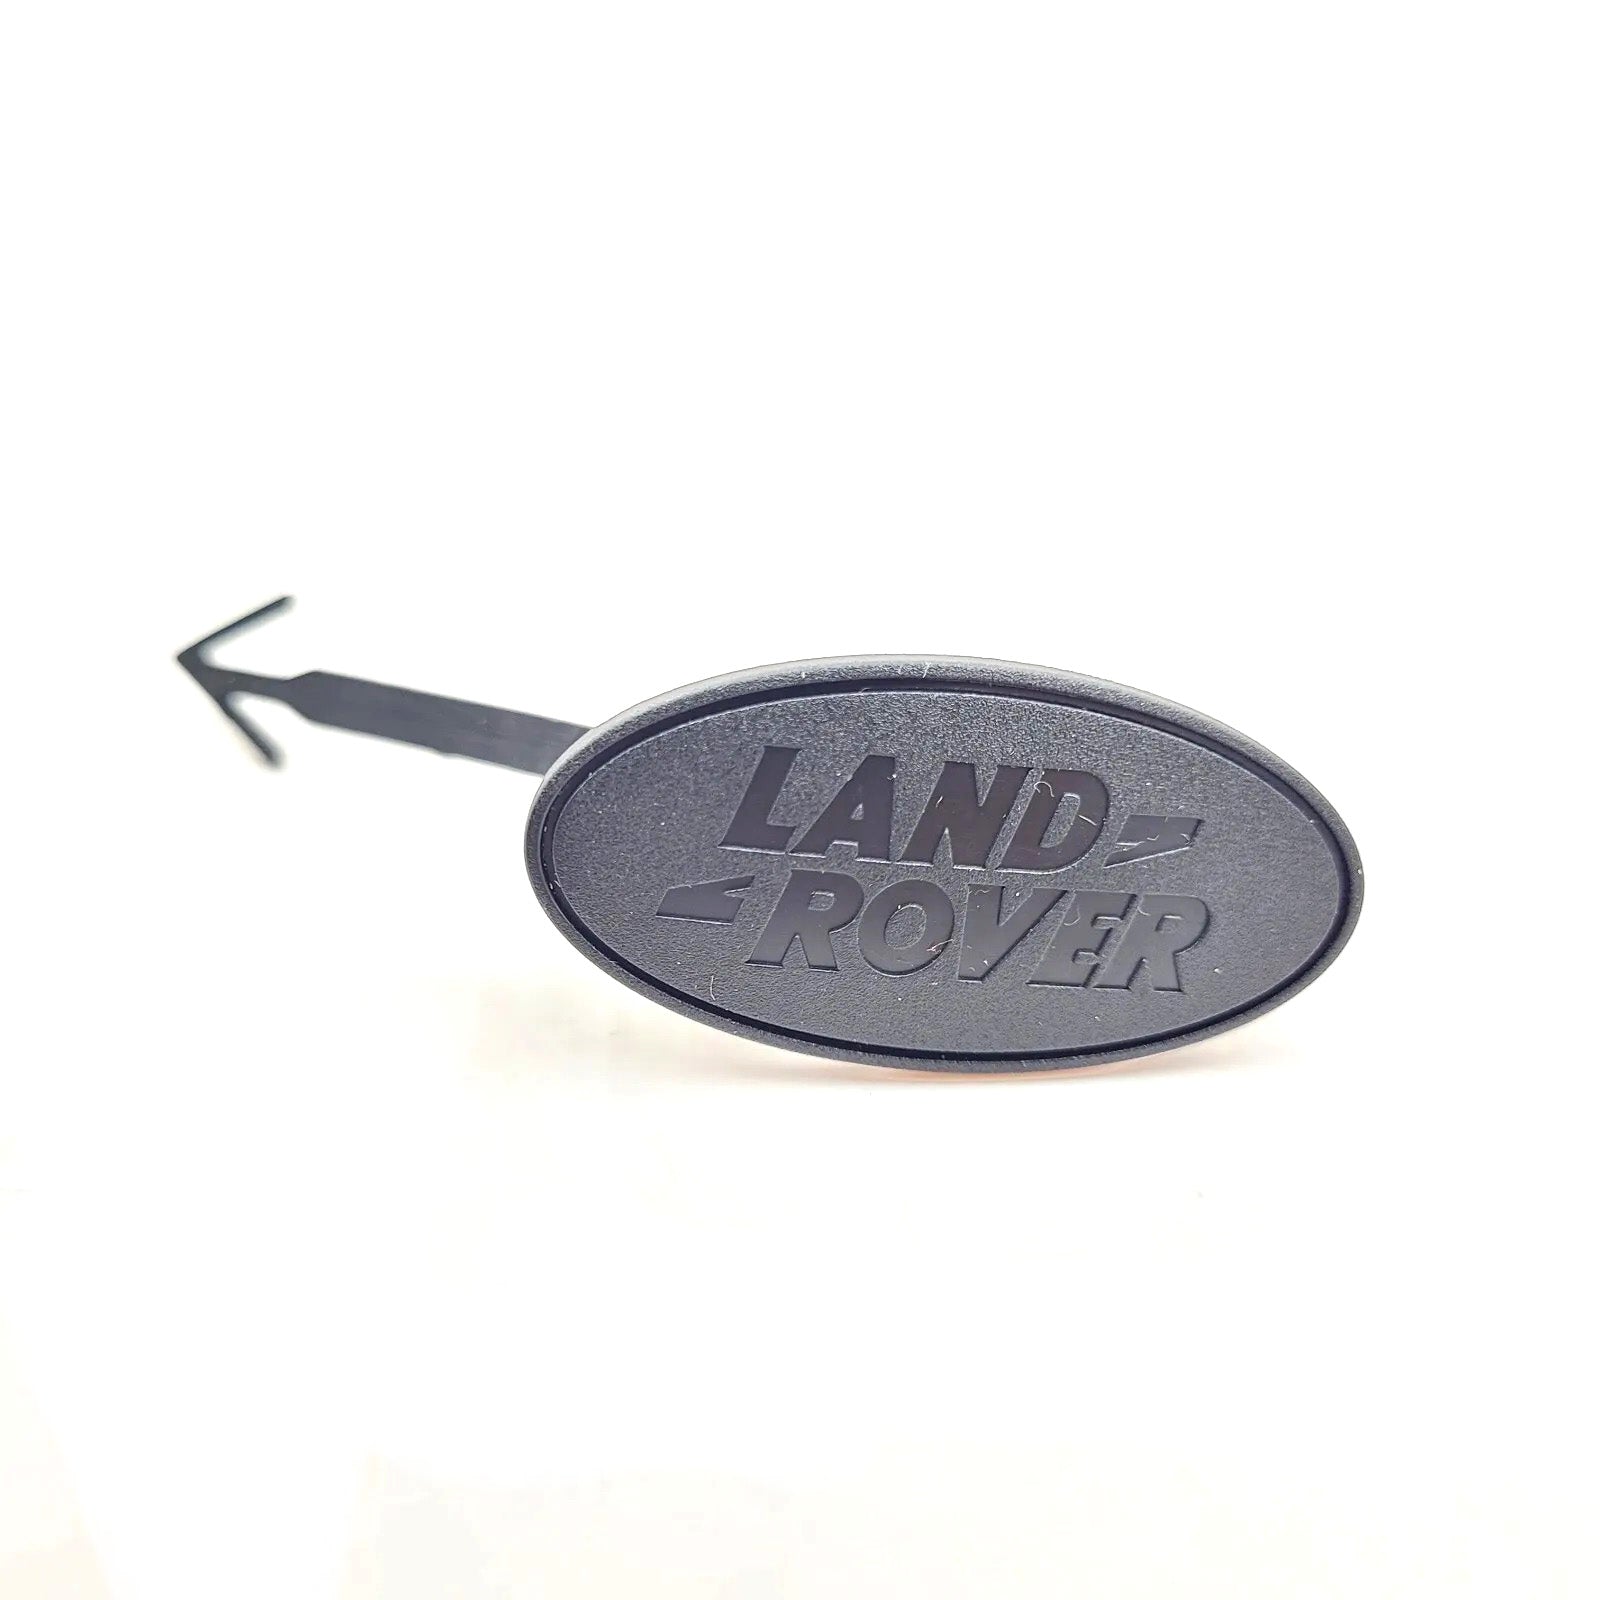 Land Rover Badge (genuine) - for speaker housings, door panels, etc